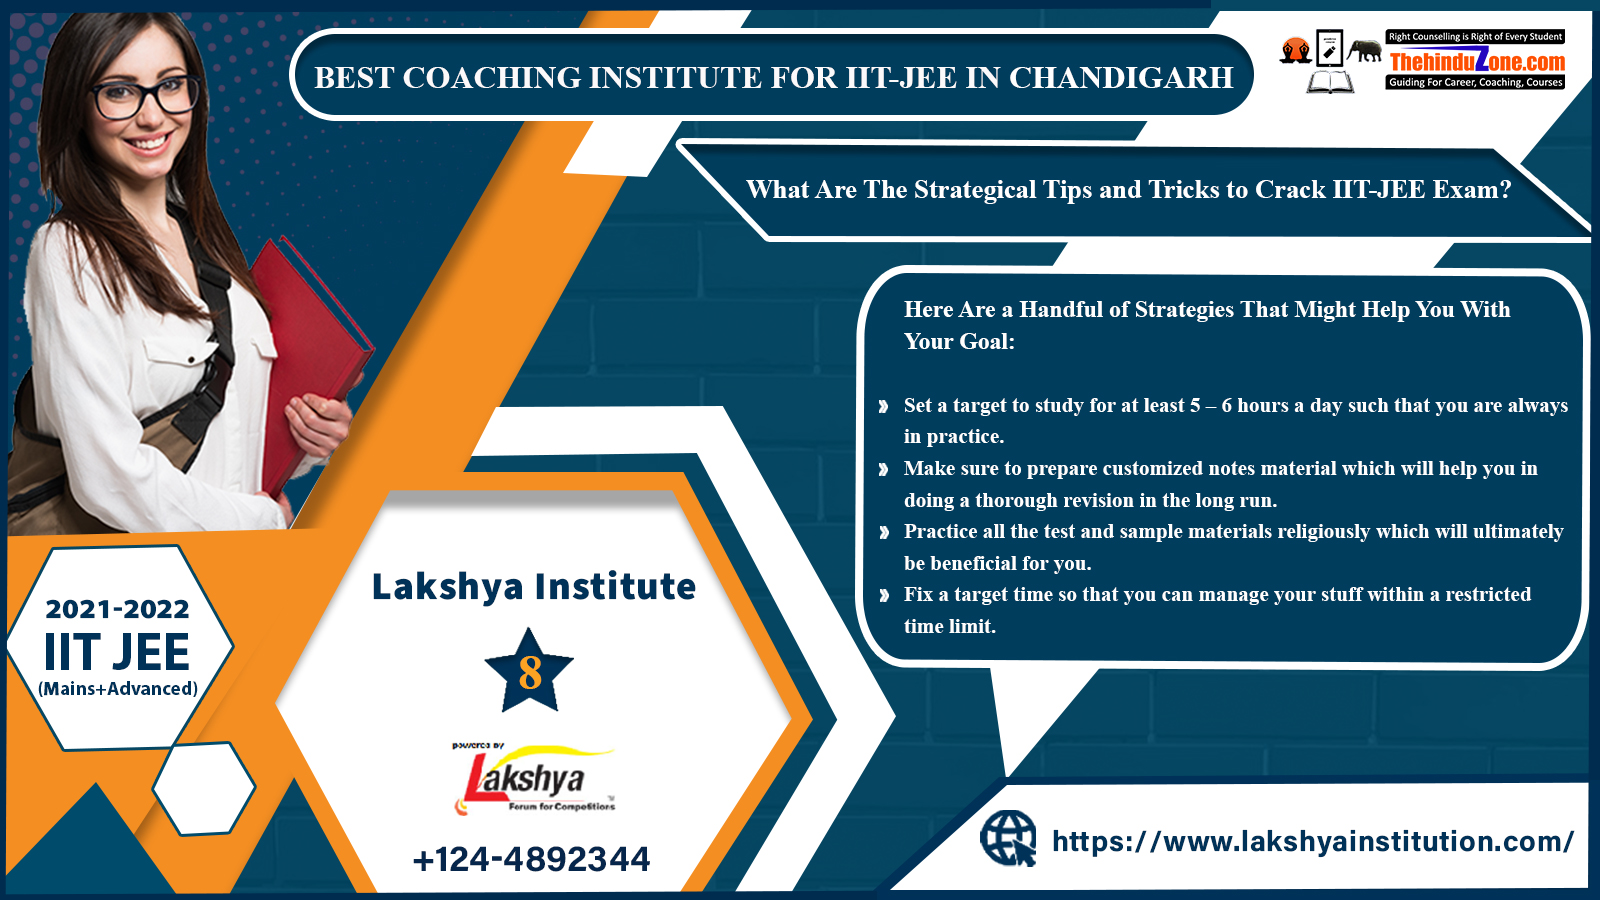 Lakshya Institute IIT JEE Coaching in Chandigarh,Rank 8 best IIT JEE Coaching in Chandigarh ,Top IIT JEE coaching in Chandigarh,Best IIT JEE Coaching in Chandigarh